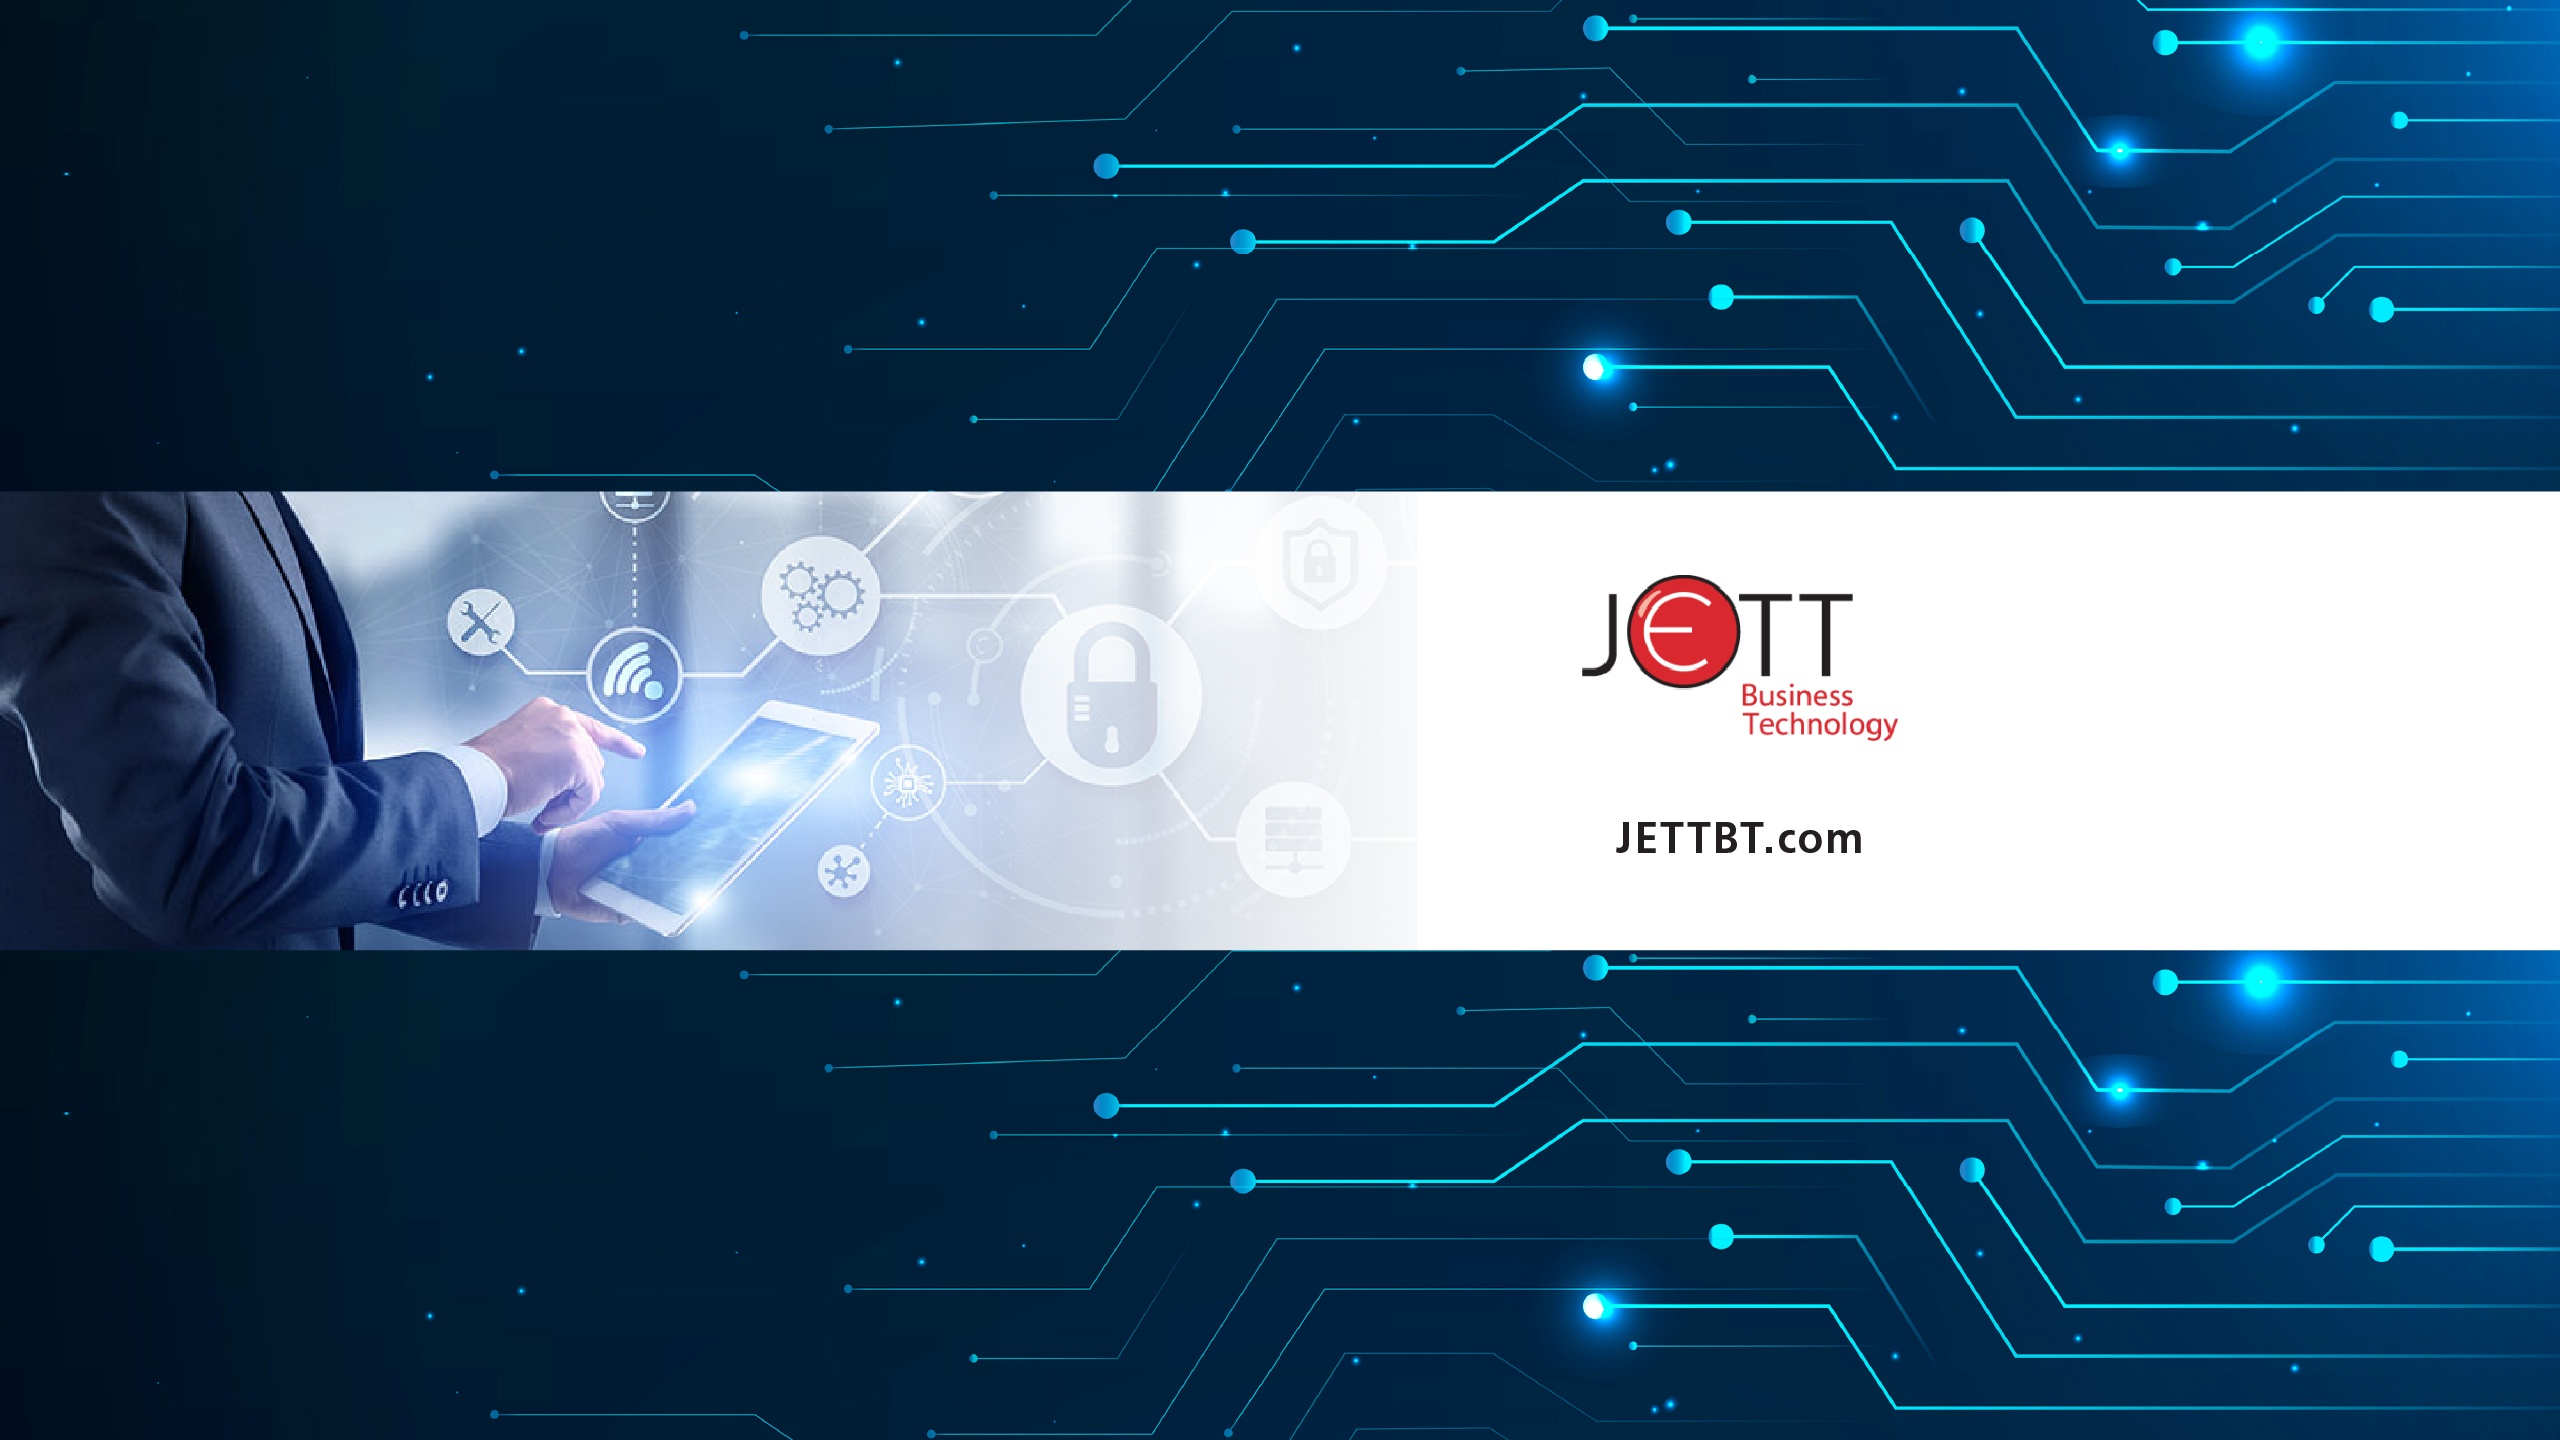 JETT Business Technology Cover Image